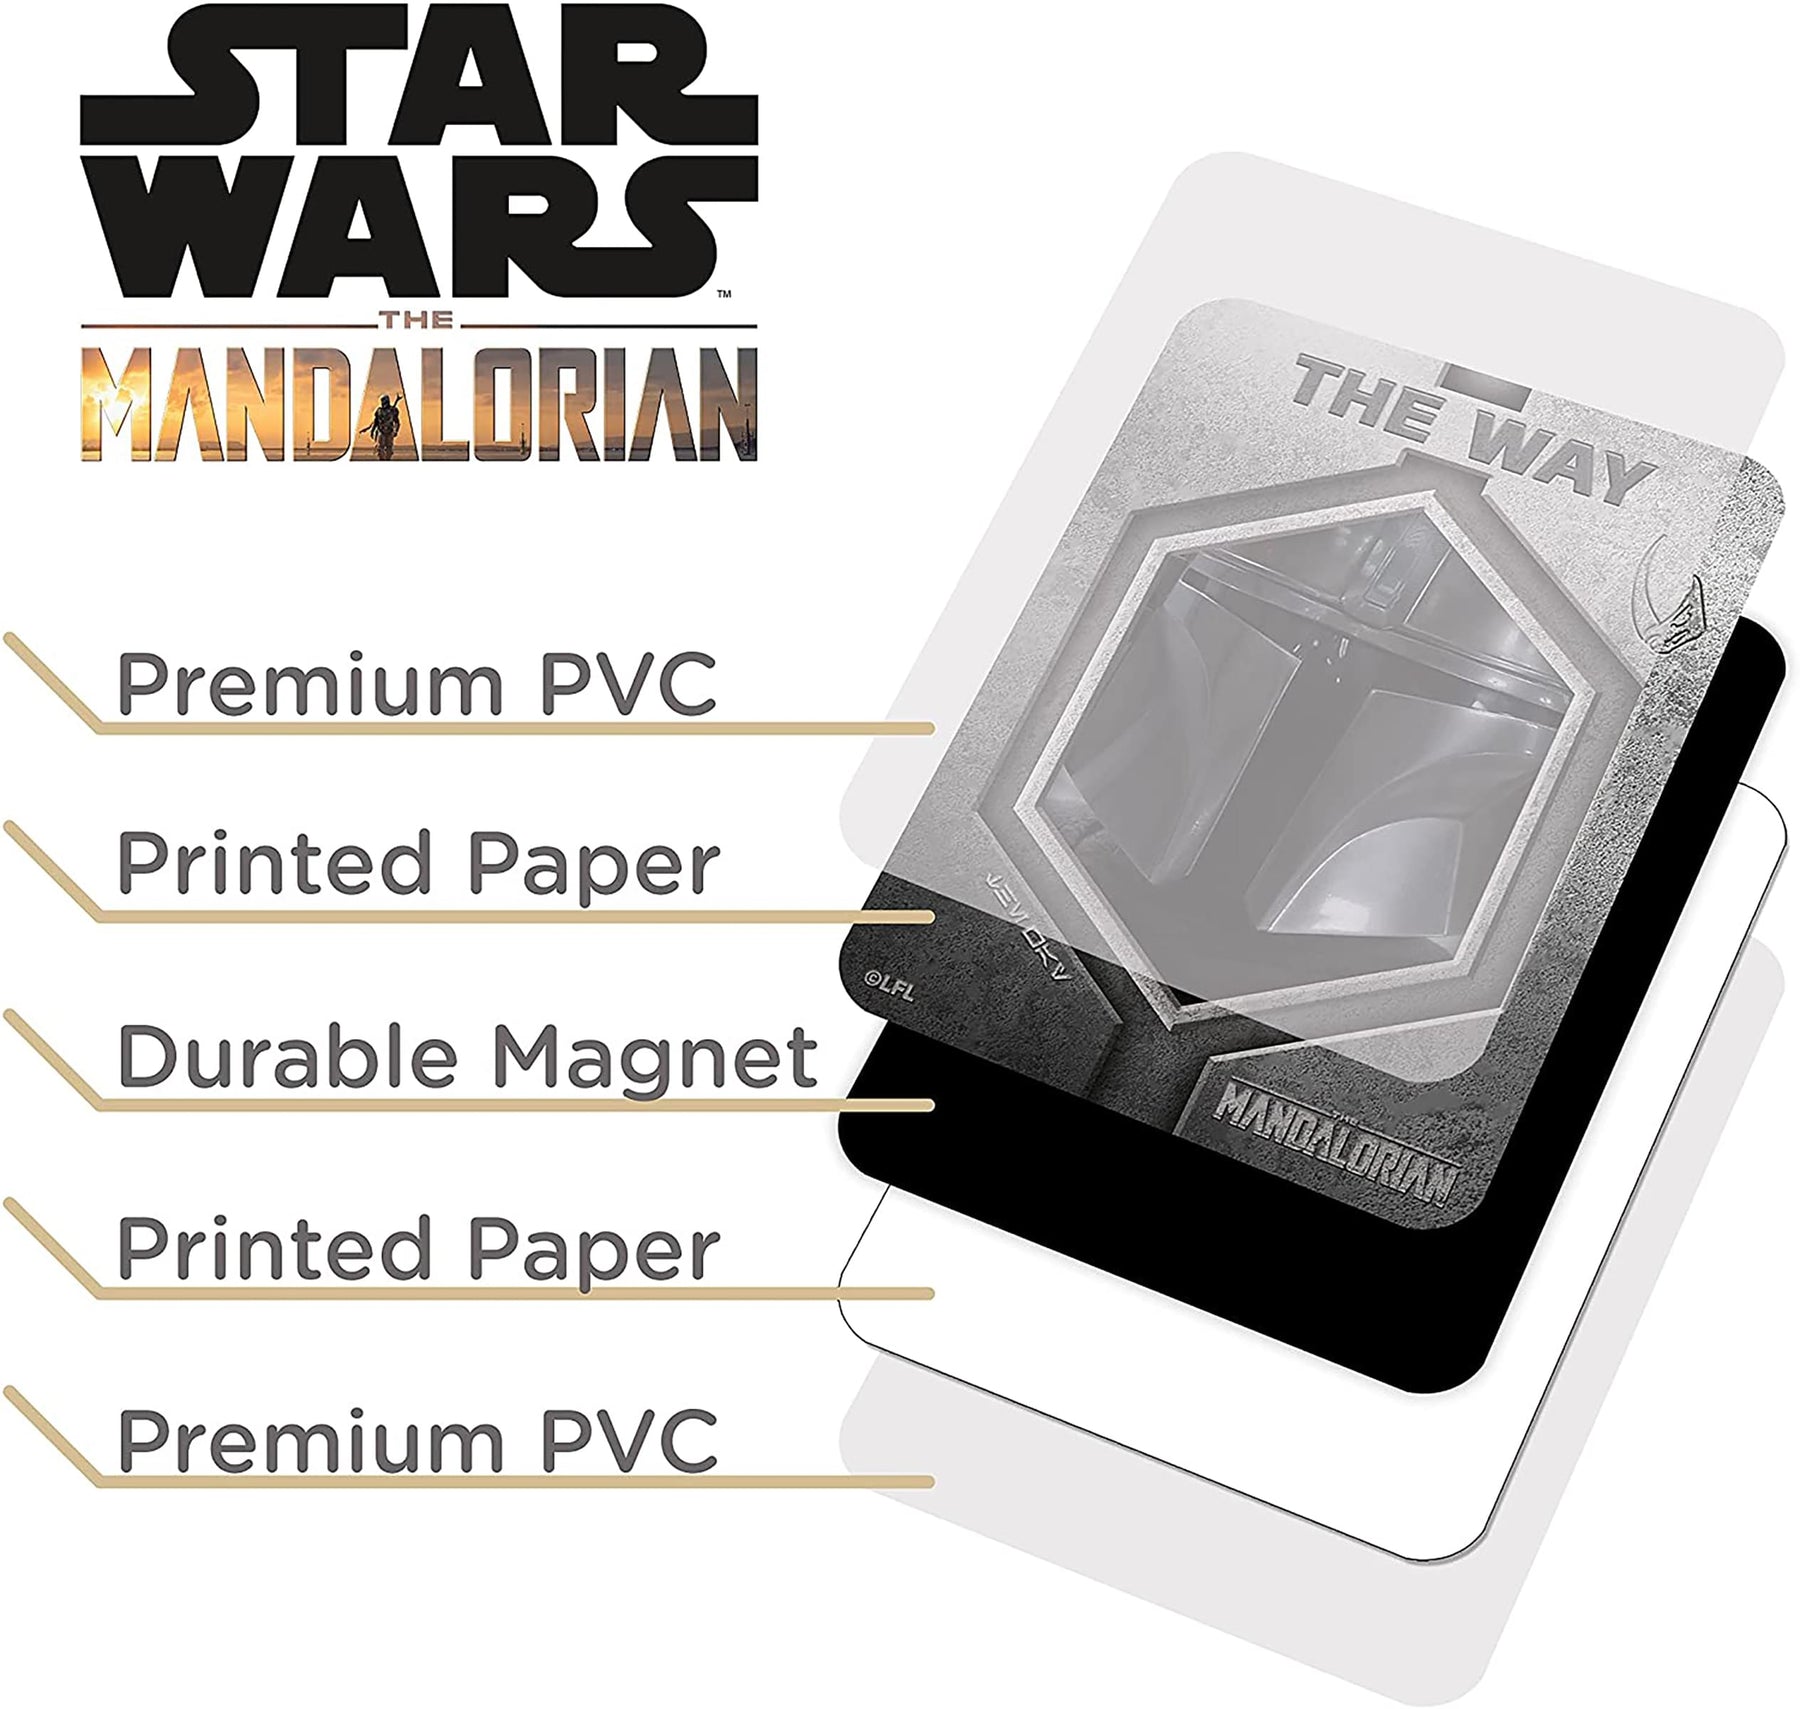 Star Wars The Mandalorian Double Sided Dishwasher Magnet